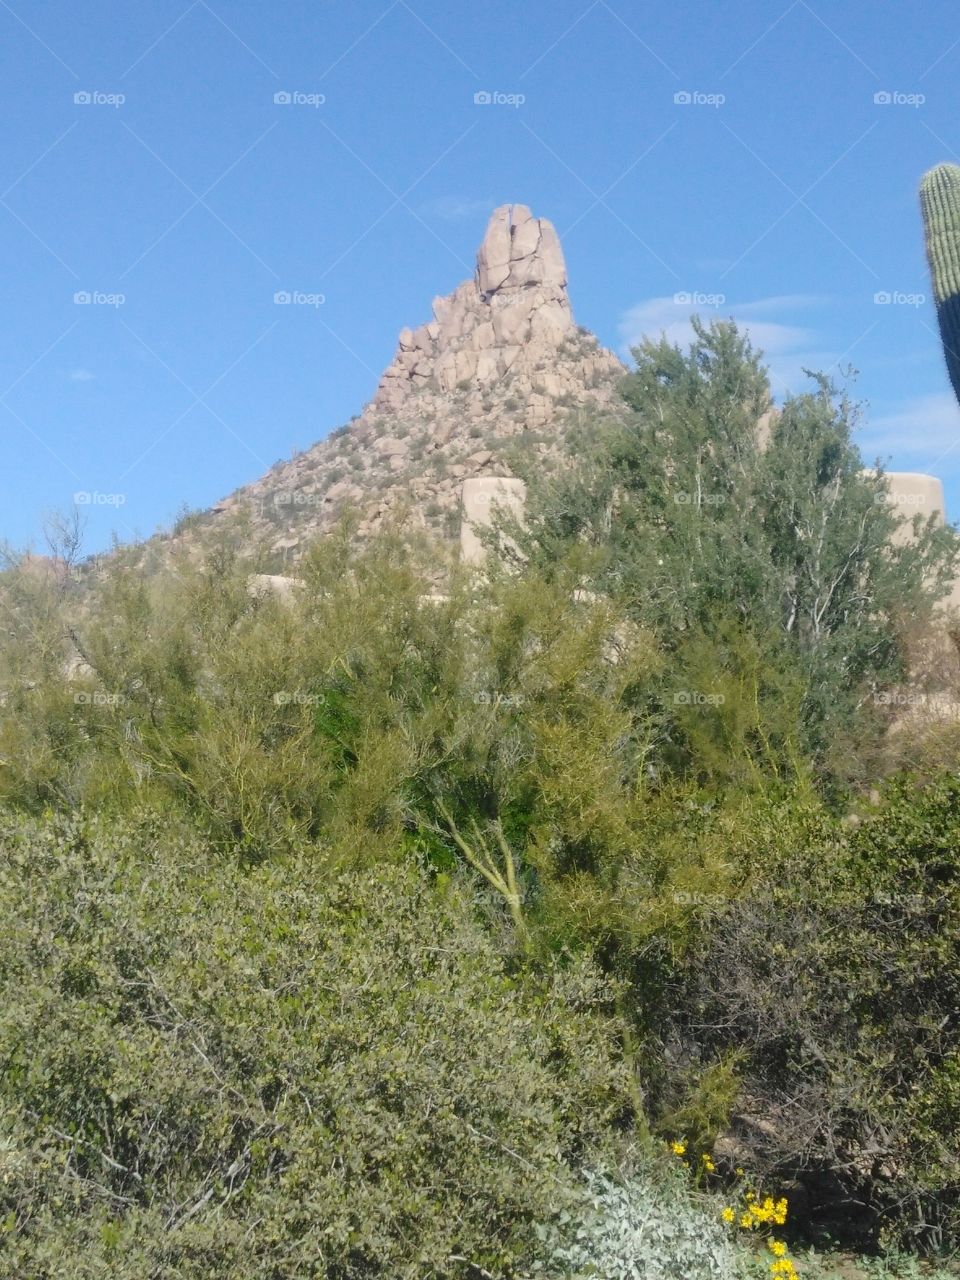 mountian of rock in the desert